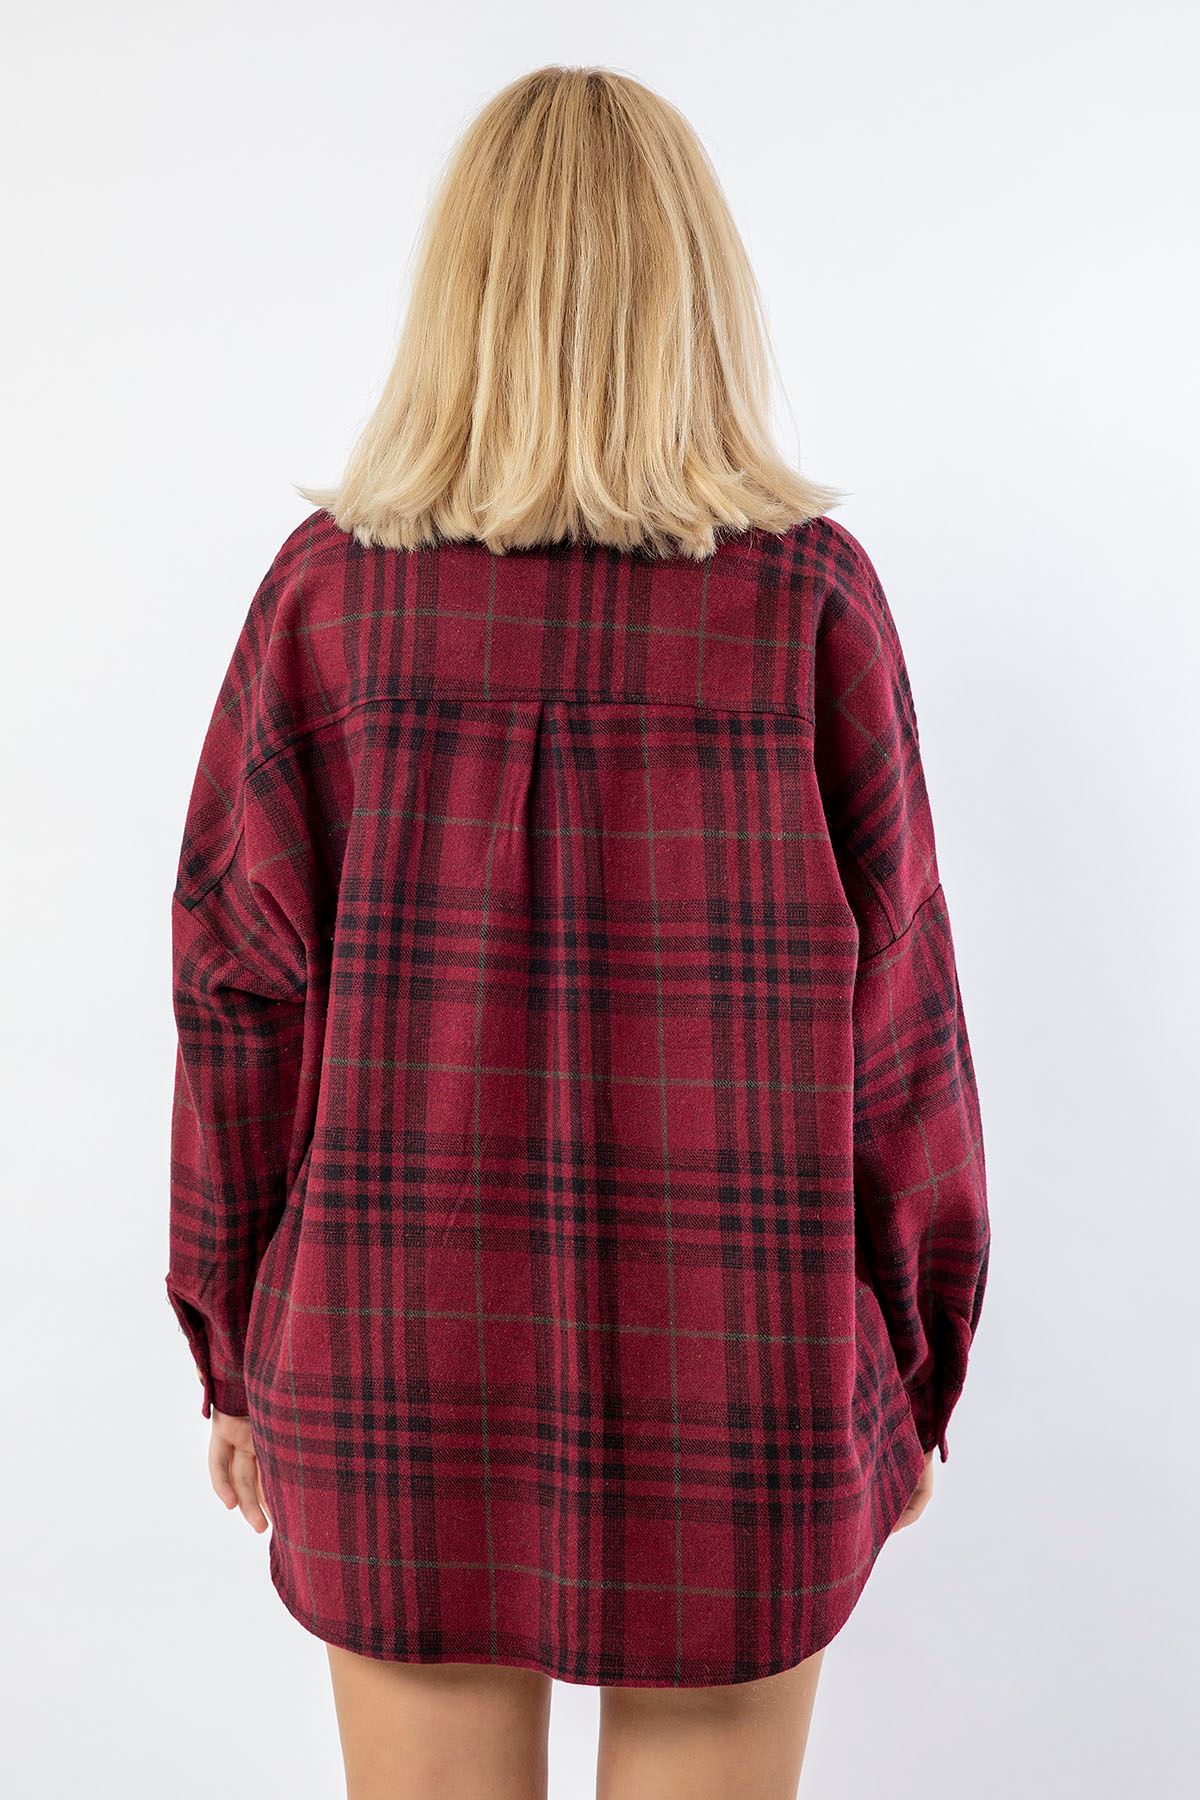 Lumberjack Fabric Long Sleeve Below Hip Oversize Plaid Women'S Shirt - Burgundy